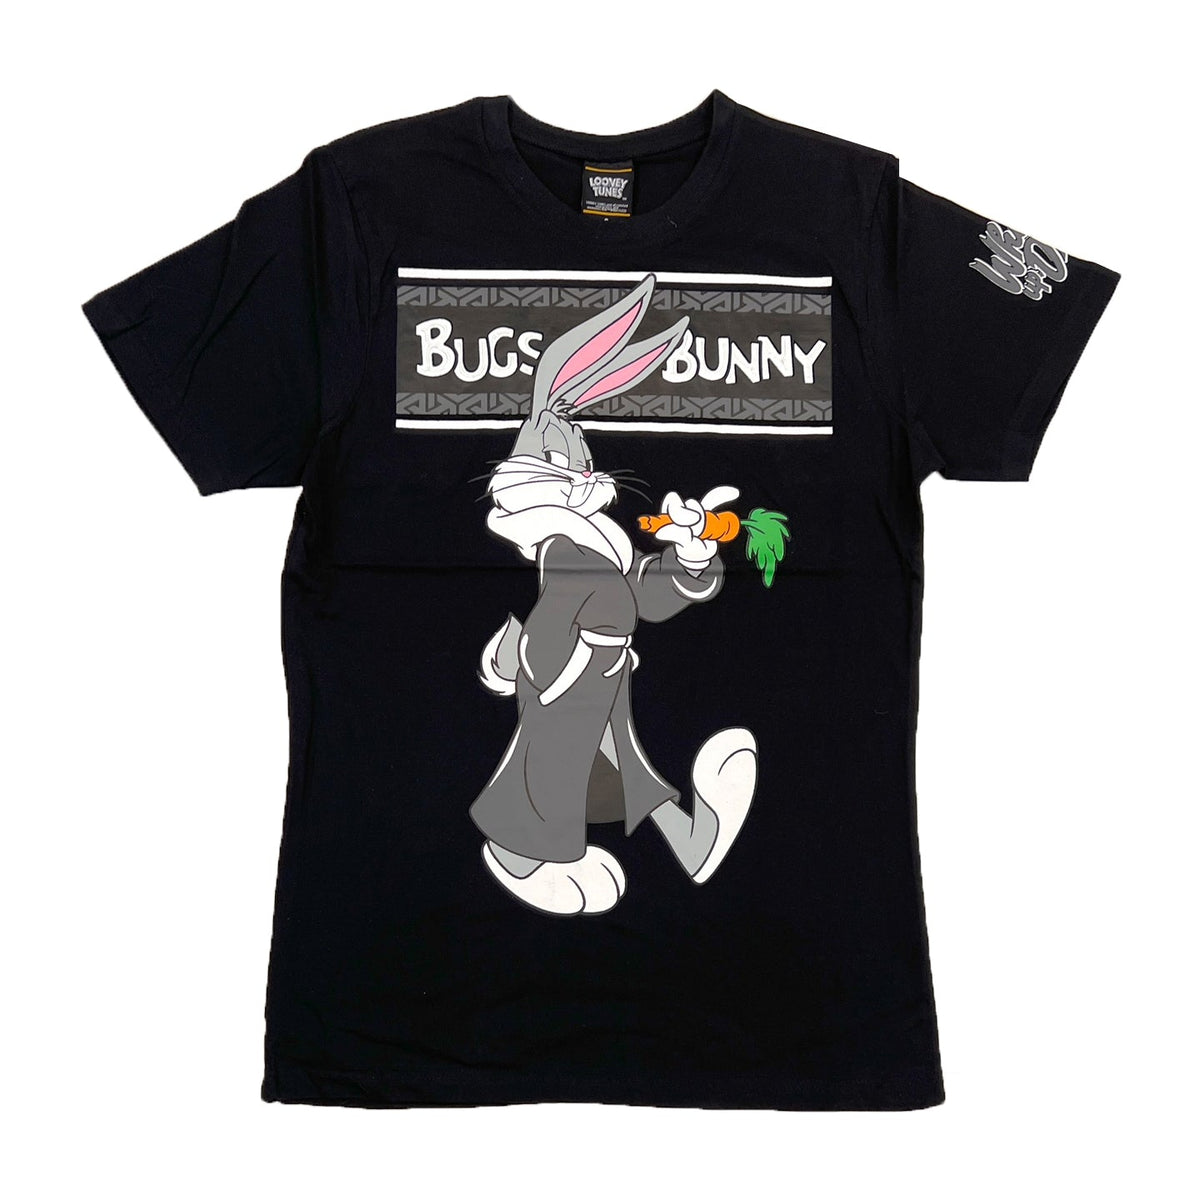 Looney Tunes Bugs Bunny Tee $16.99 2 $30 for / (Black)